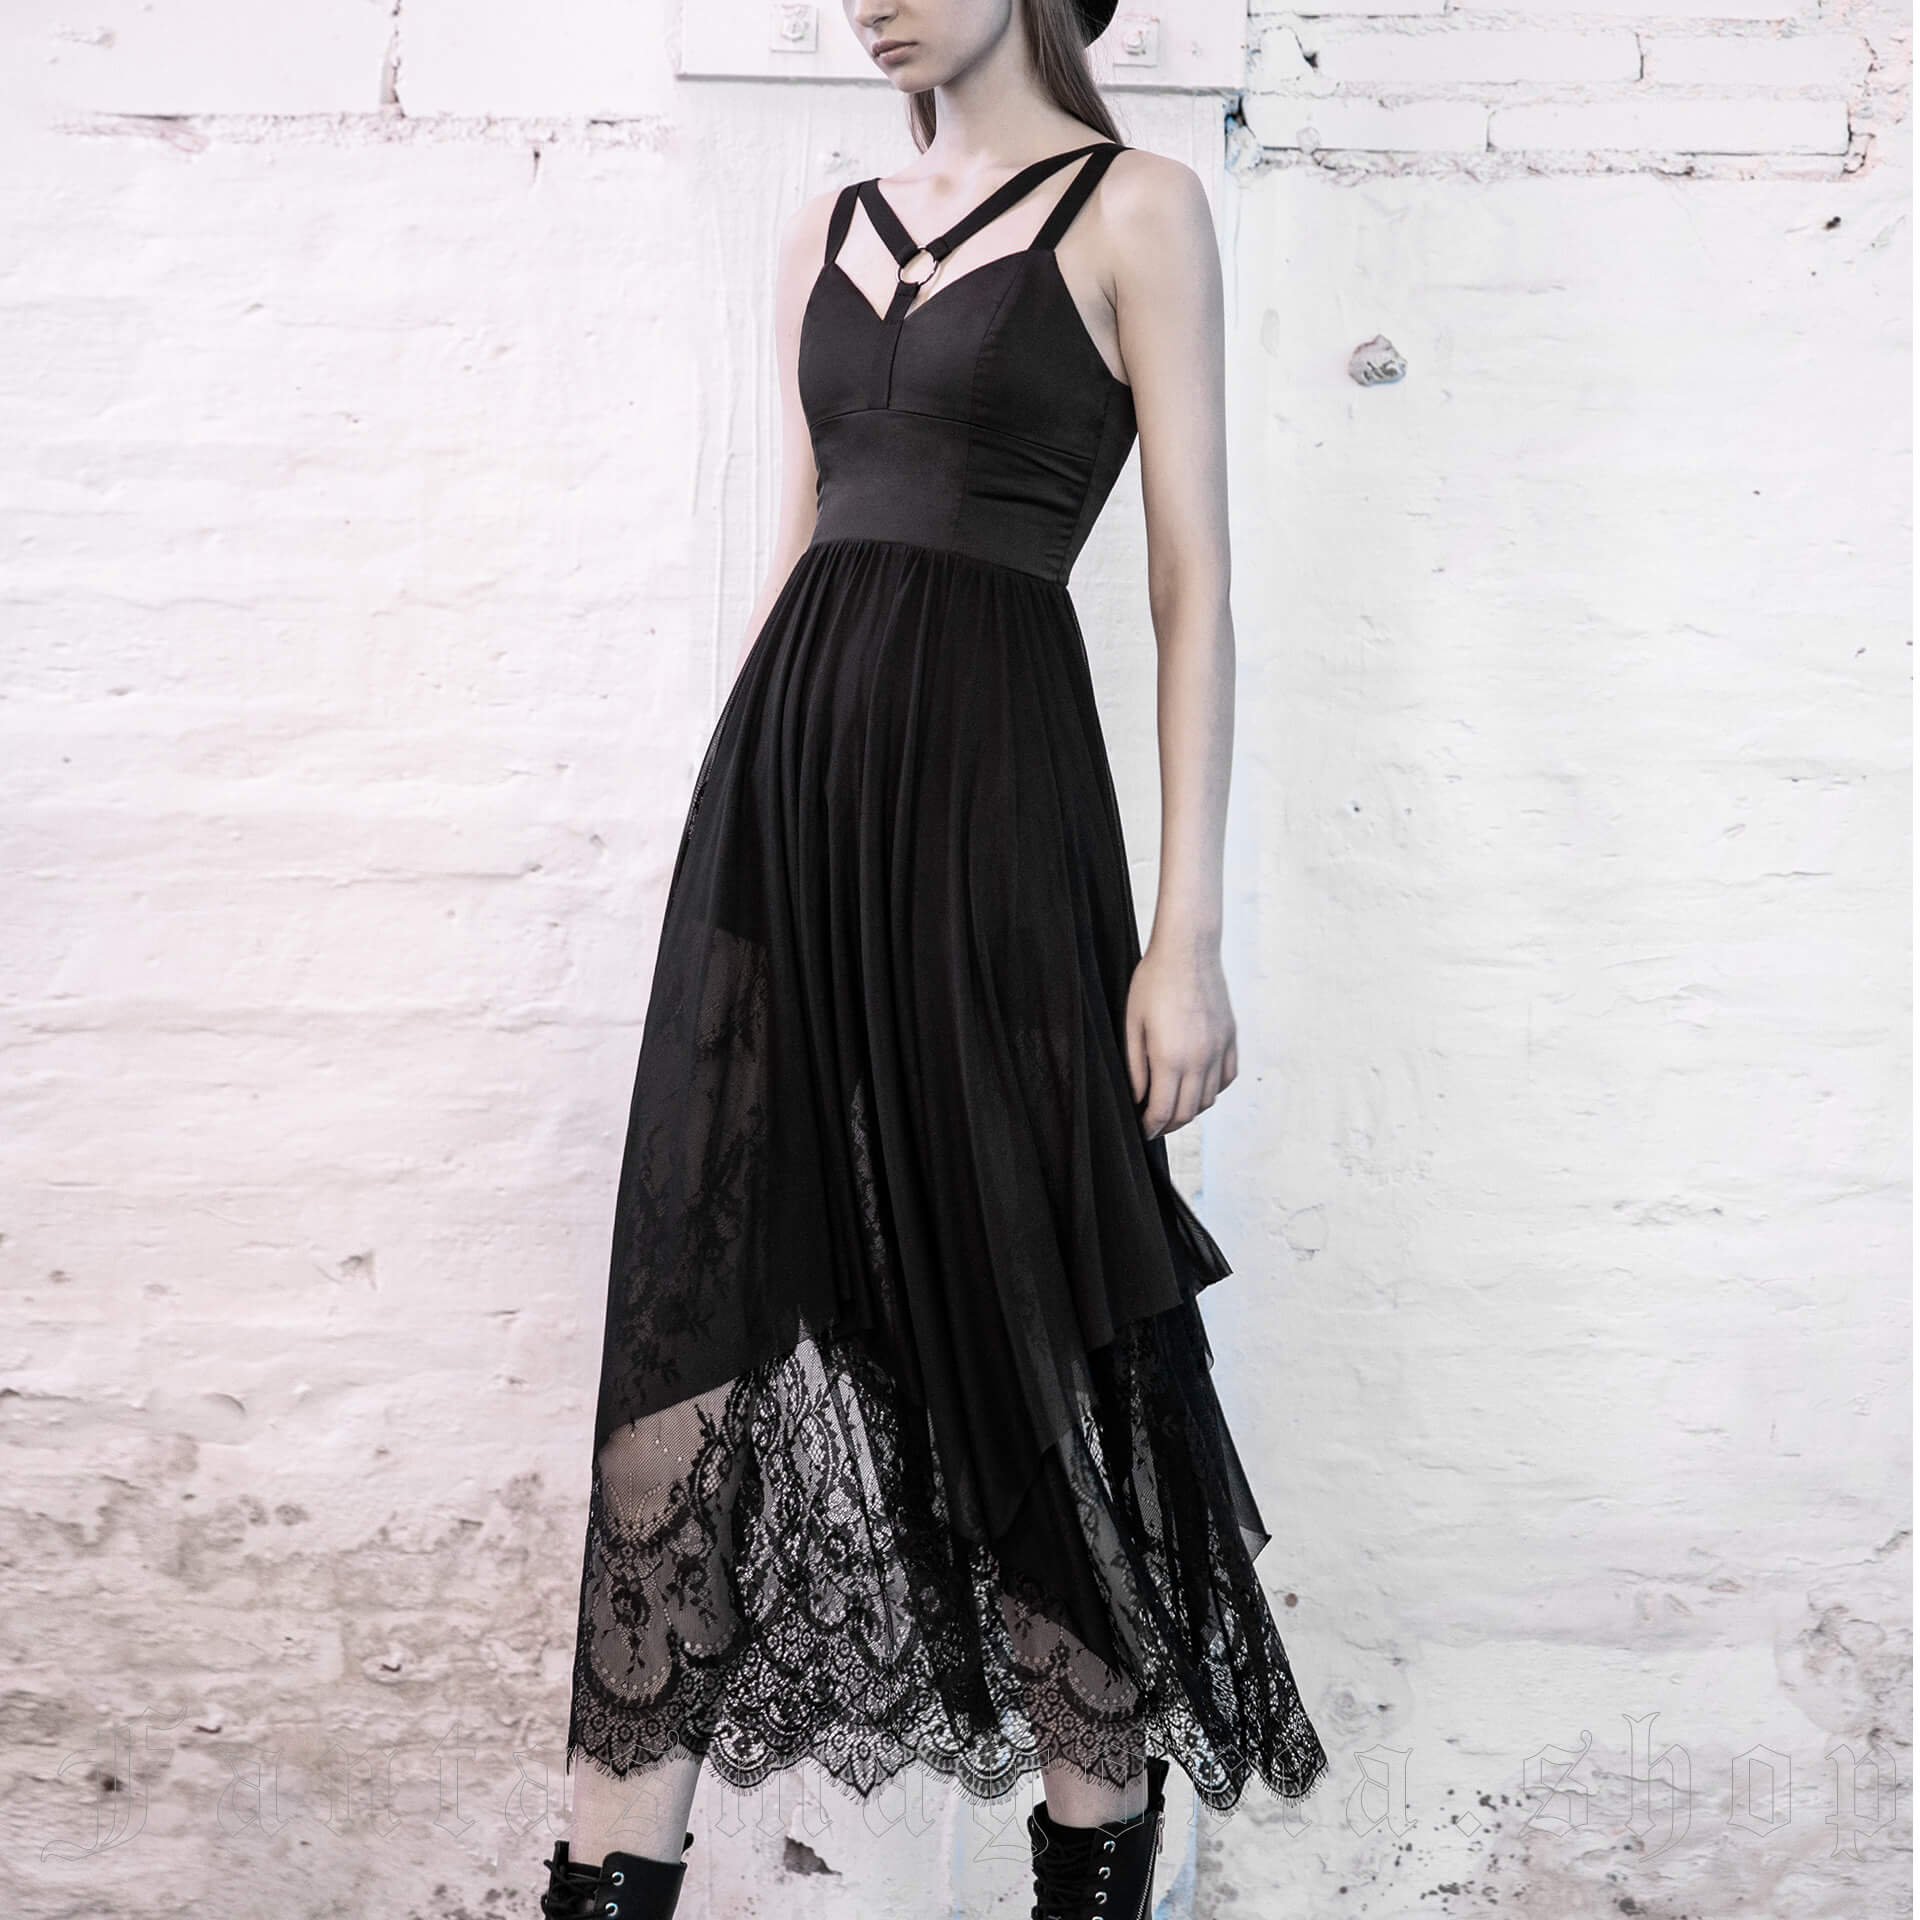 Black Sheer Dress, Tulle Dress, See Through Dress, Plus Size Clothing,  Elegant Dress, Mesh Dress, Gothic Clothing, Evening Cyberpunk Dress 